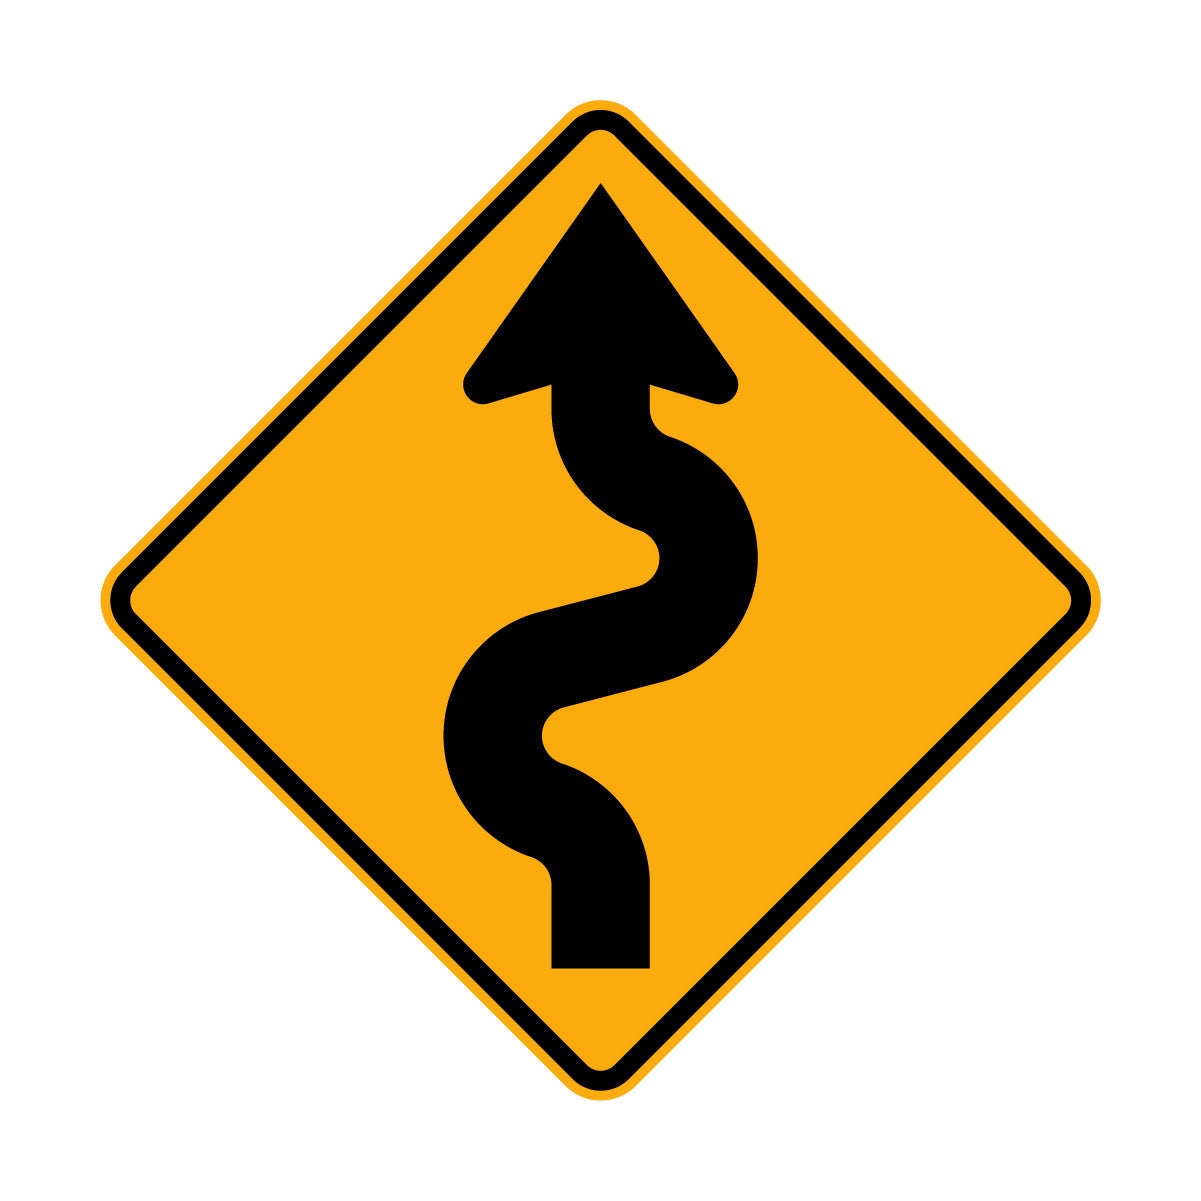 Warning: Winding Road Sign